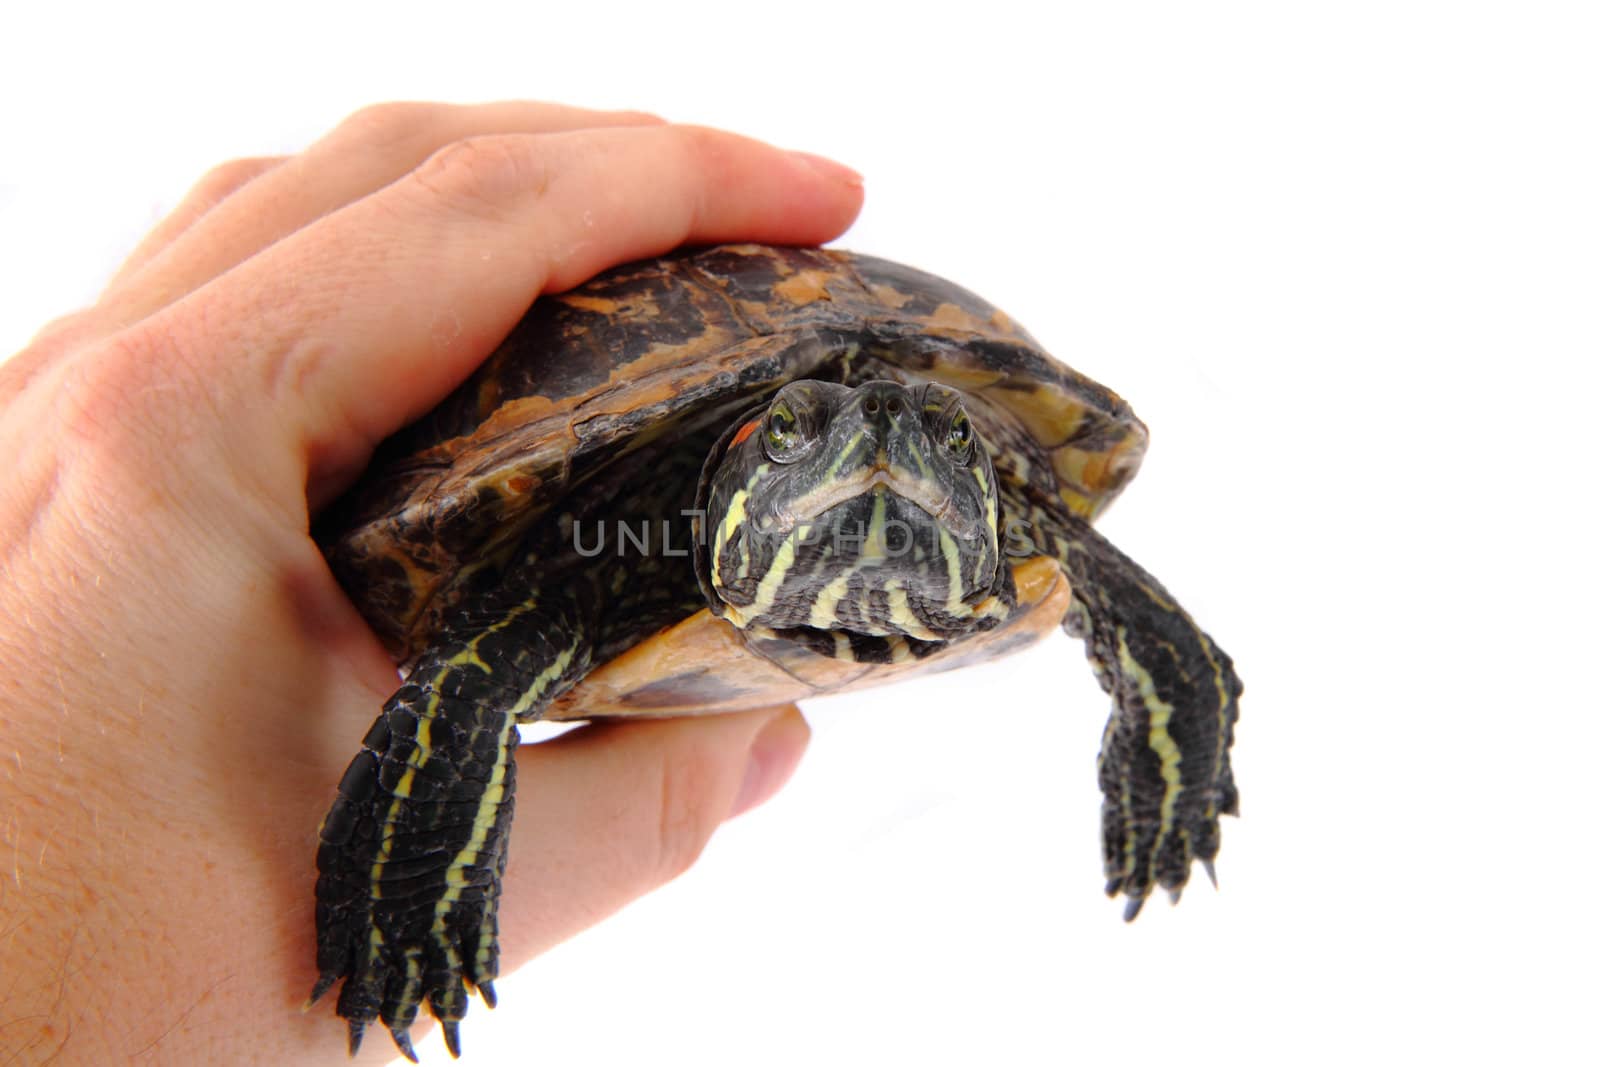 Turtle in the hands by jonnysek